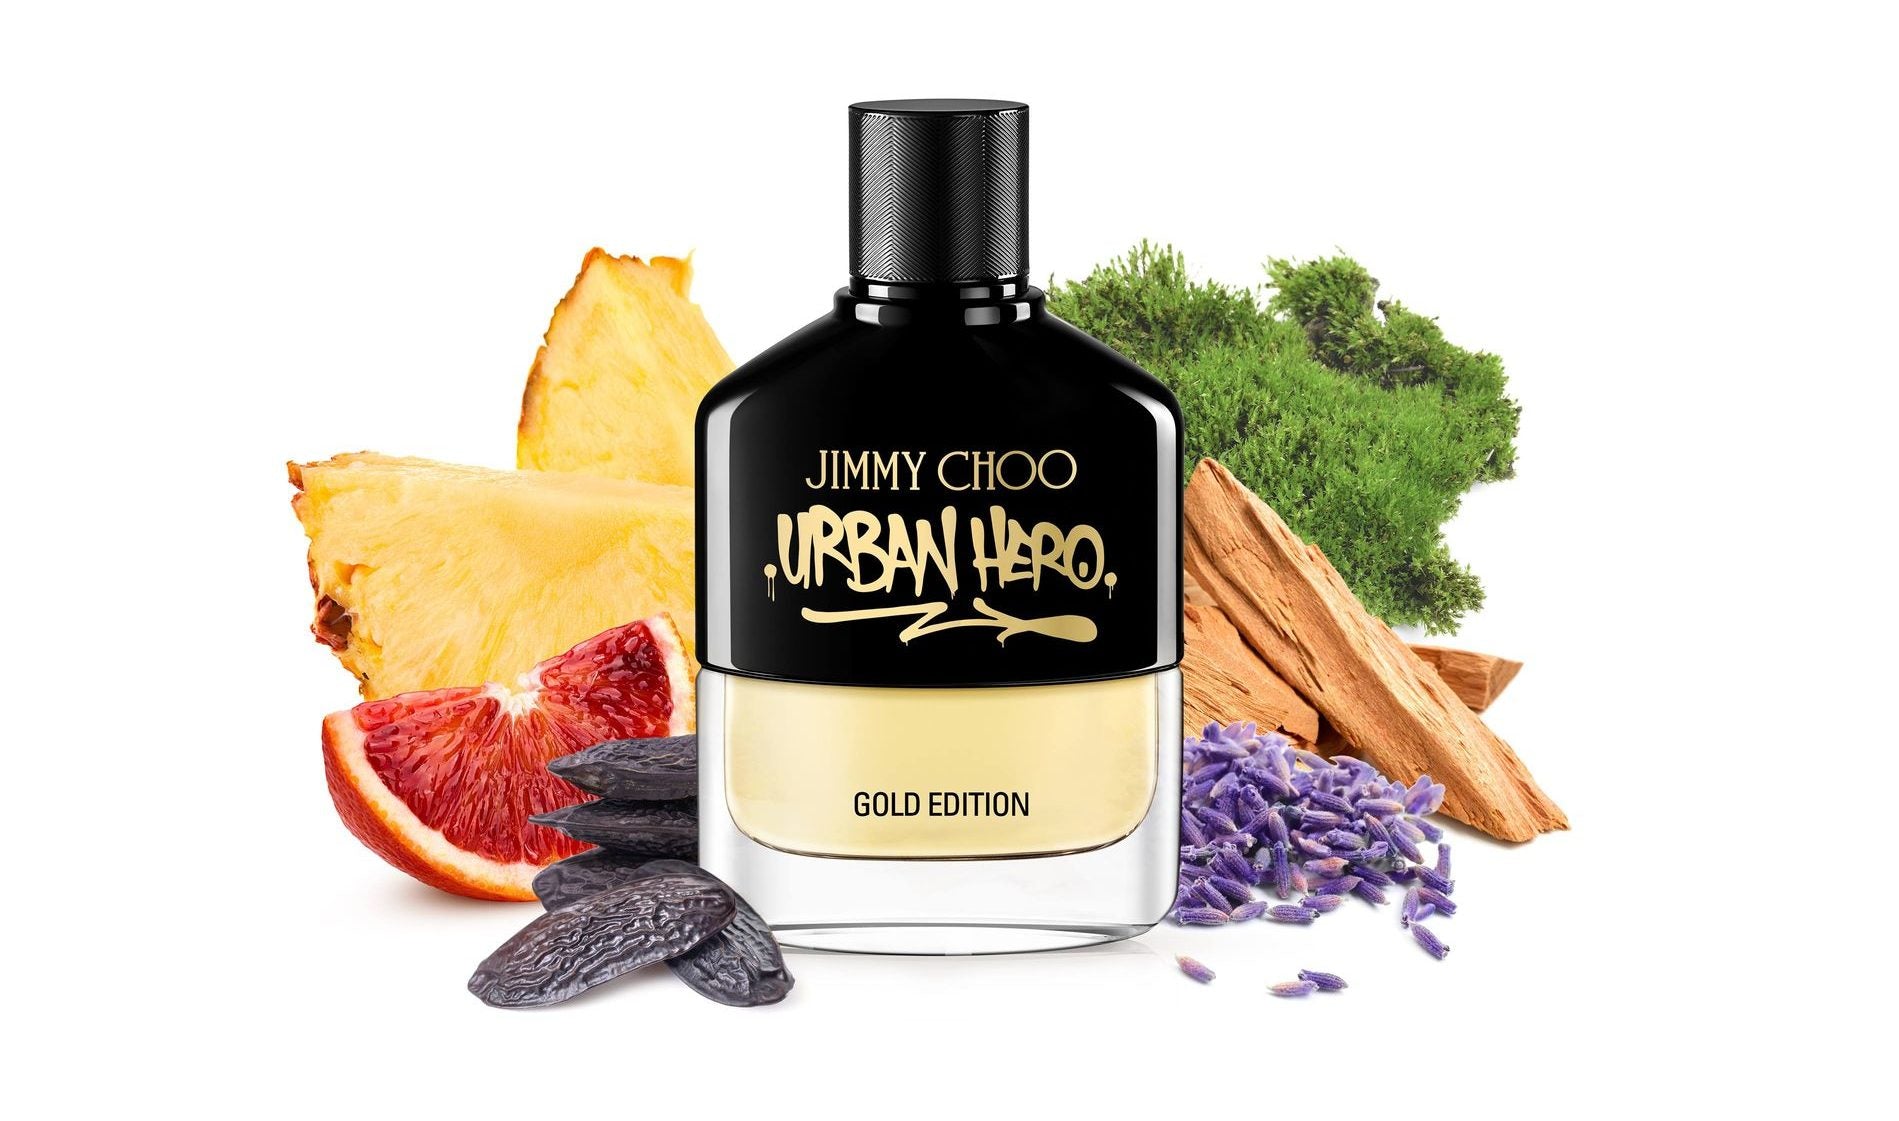 Jimmy Choo Urban Hero Gold oz De Rafaelos Eau ml Edition 1.7 – Parfum 50